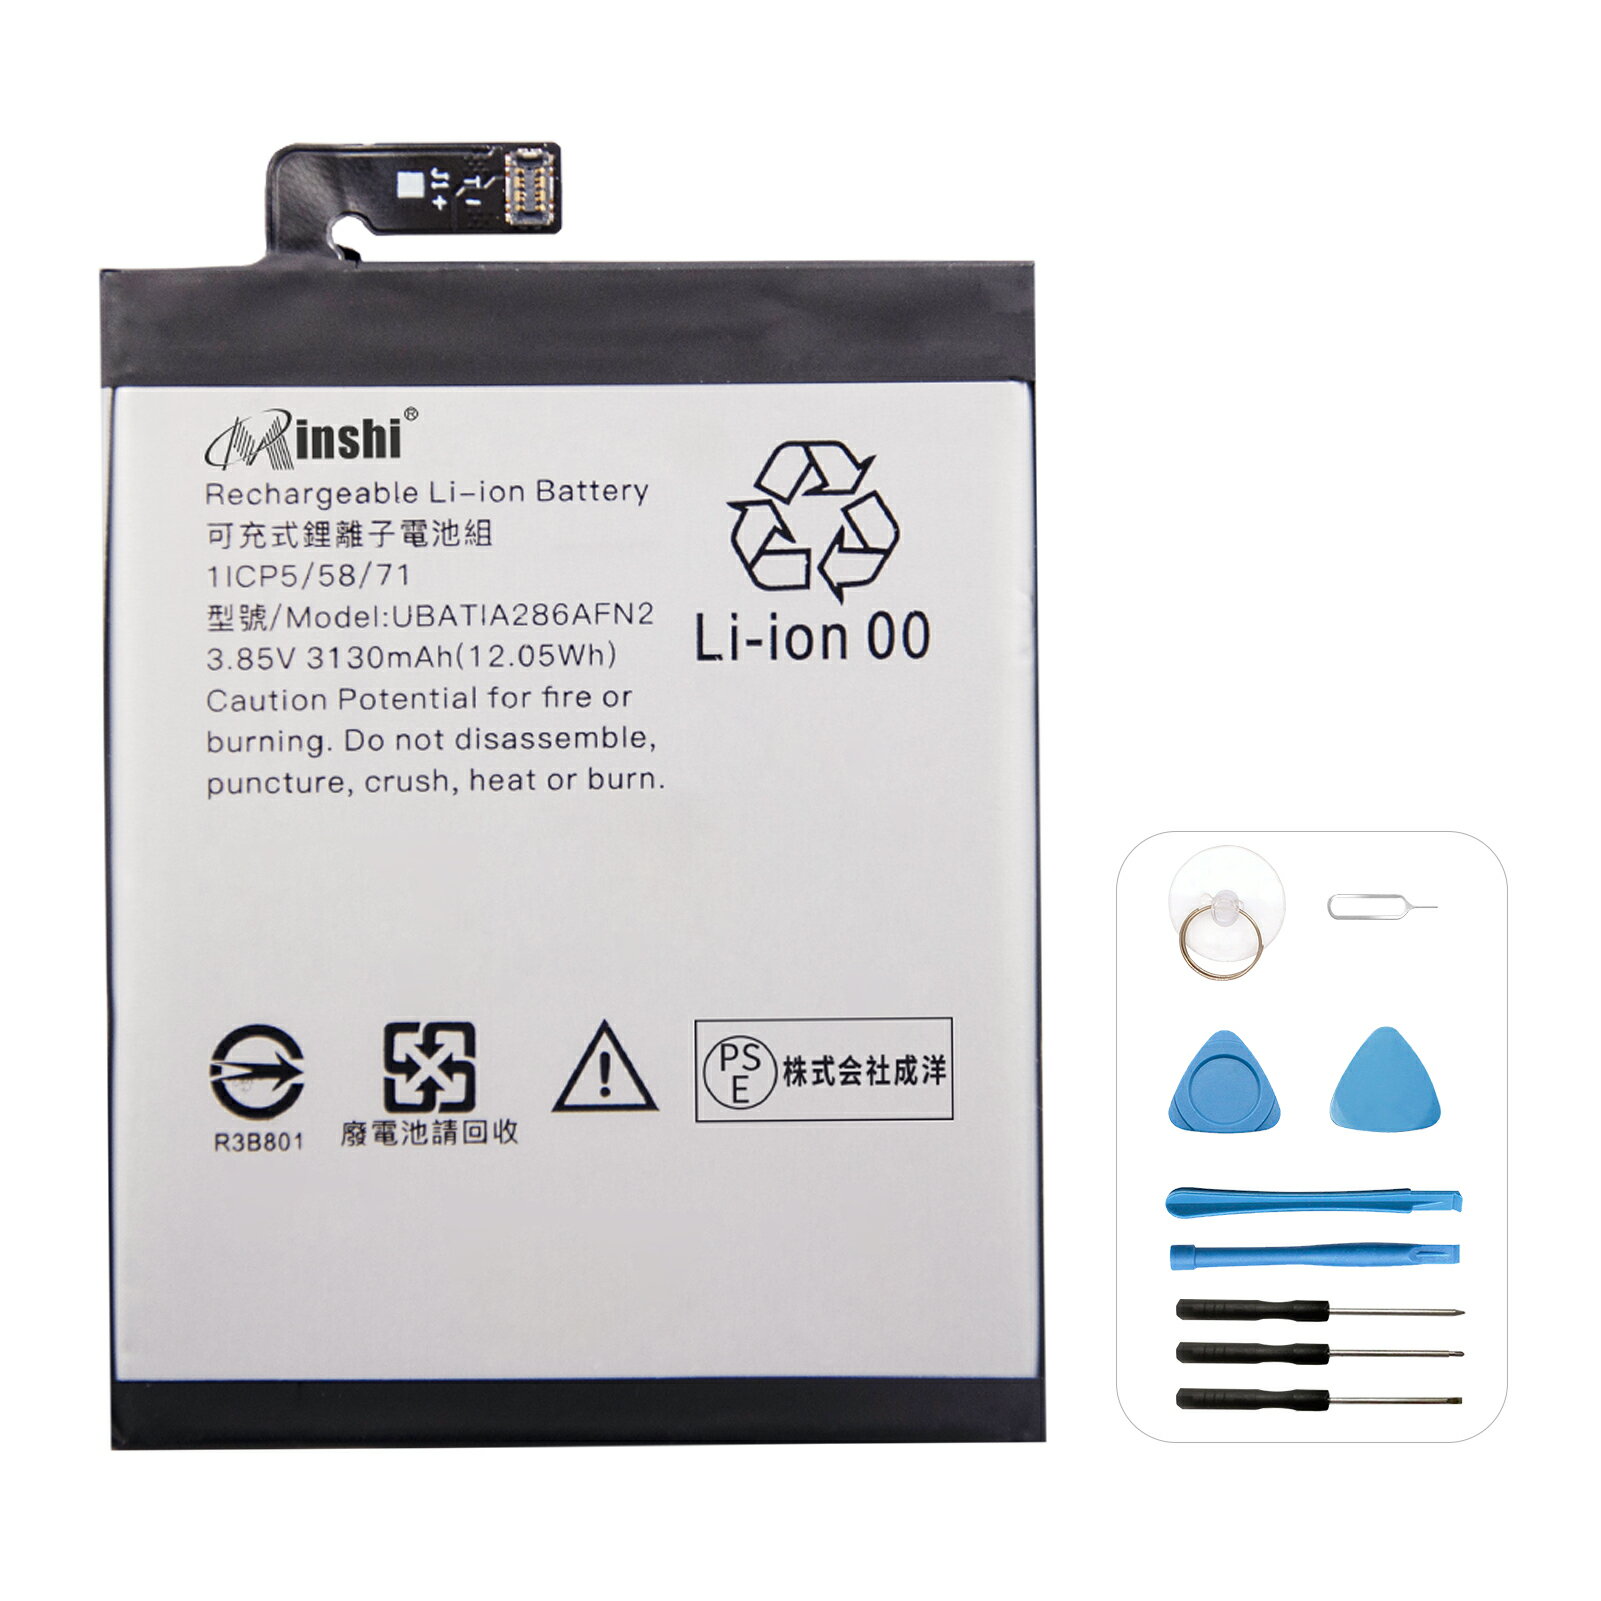 minshi 新品 ASUS AQUOS R2 WKY 互換バッテリー 高品質交換用電池パック PSE認証 工具セット 1年間保証 3130mAh